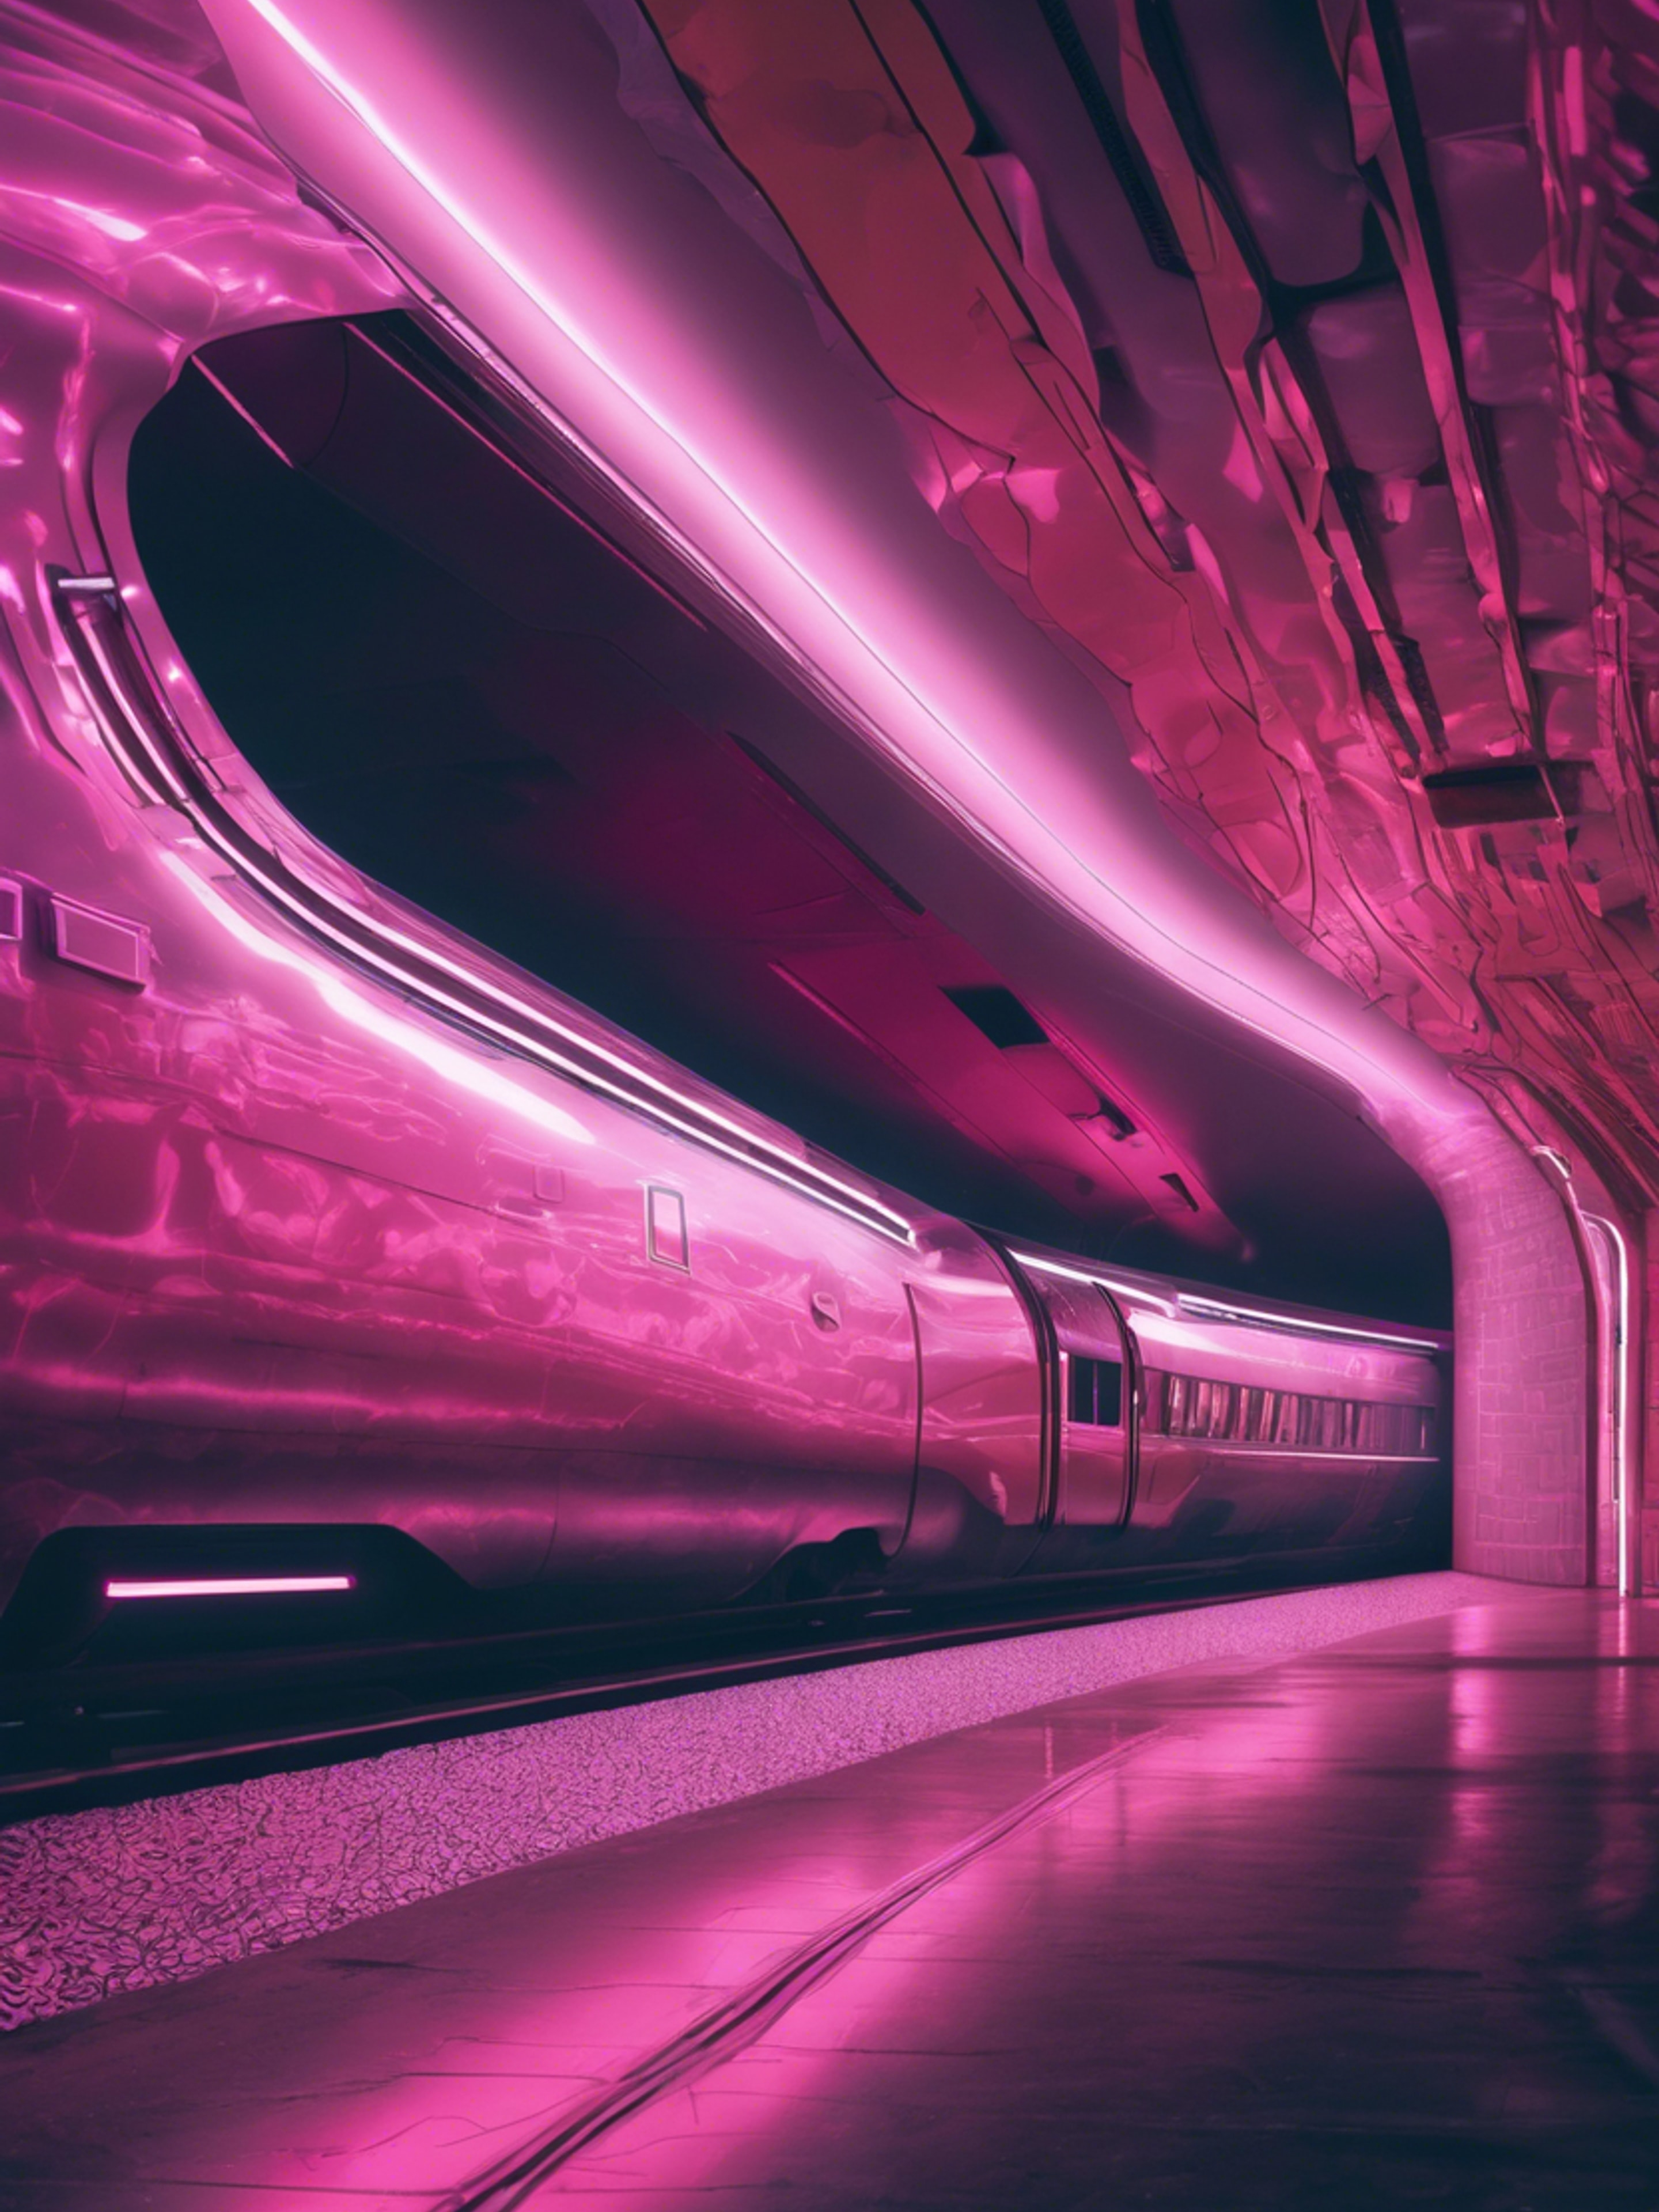 A sleek and shiny Cyber Y2K-style train speeding through a tunnel lit with neon lights.壁紙[25842df342c8431fa80b]